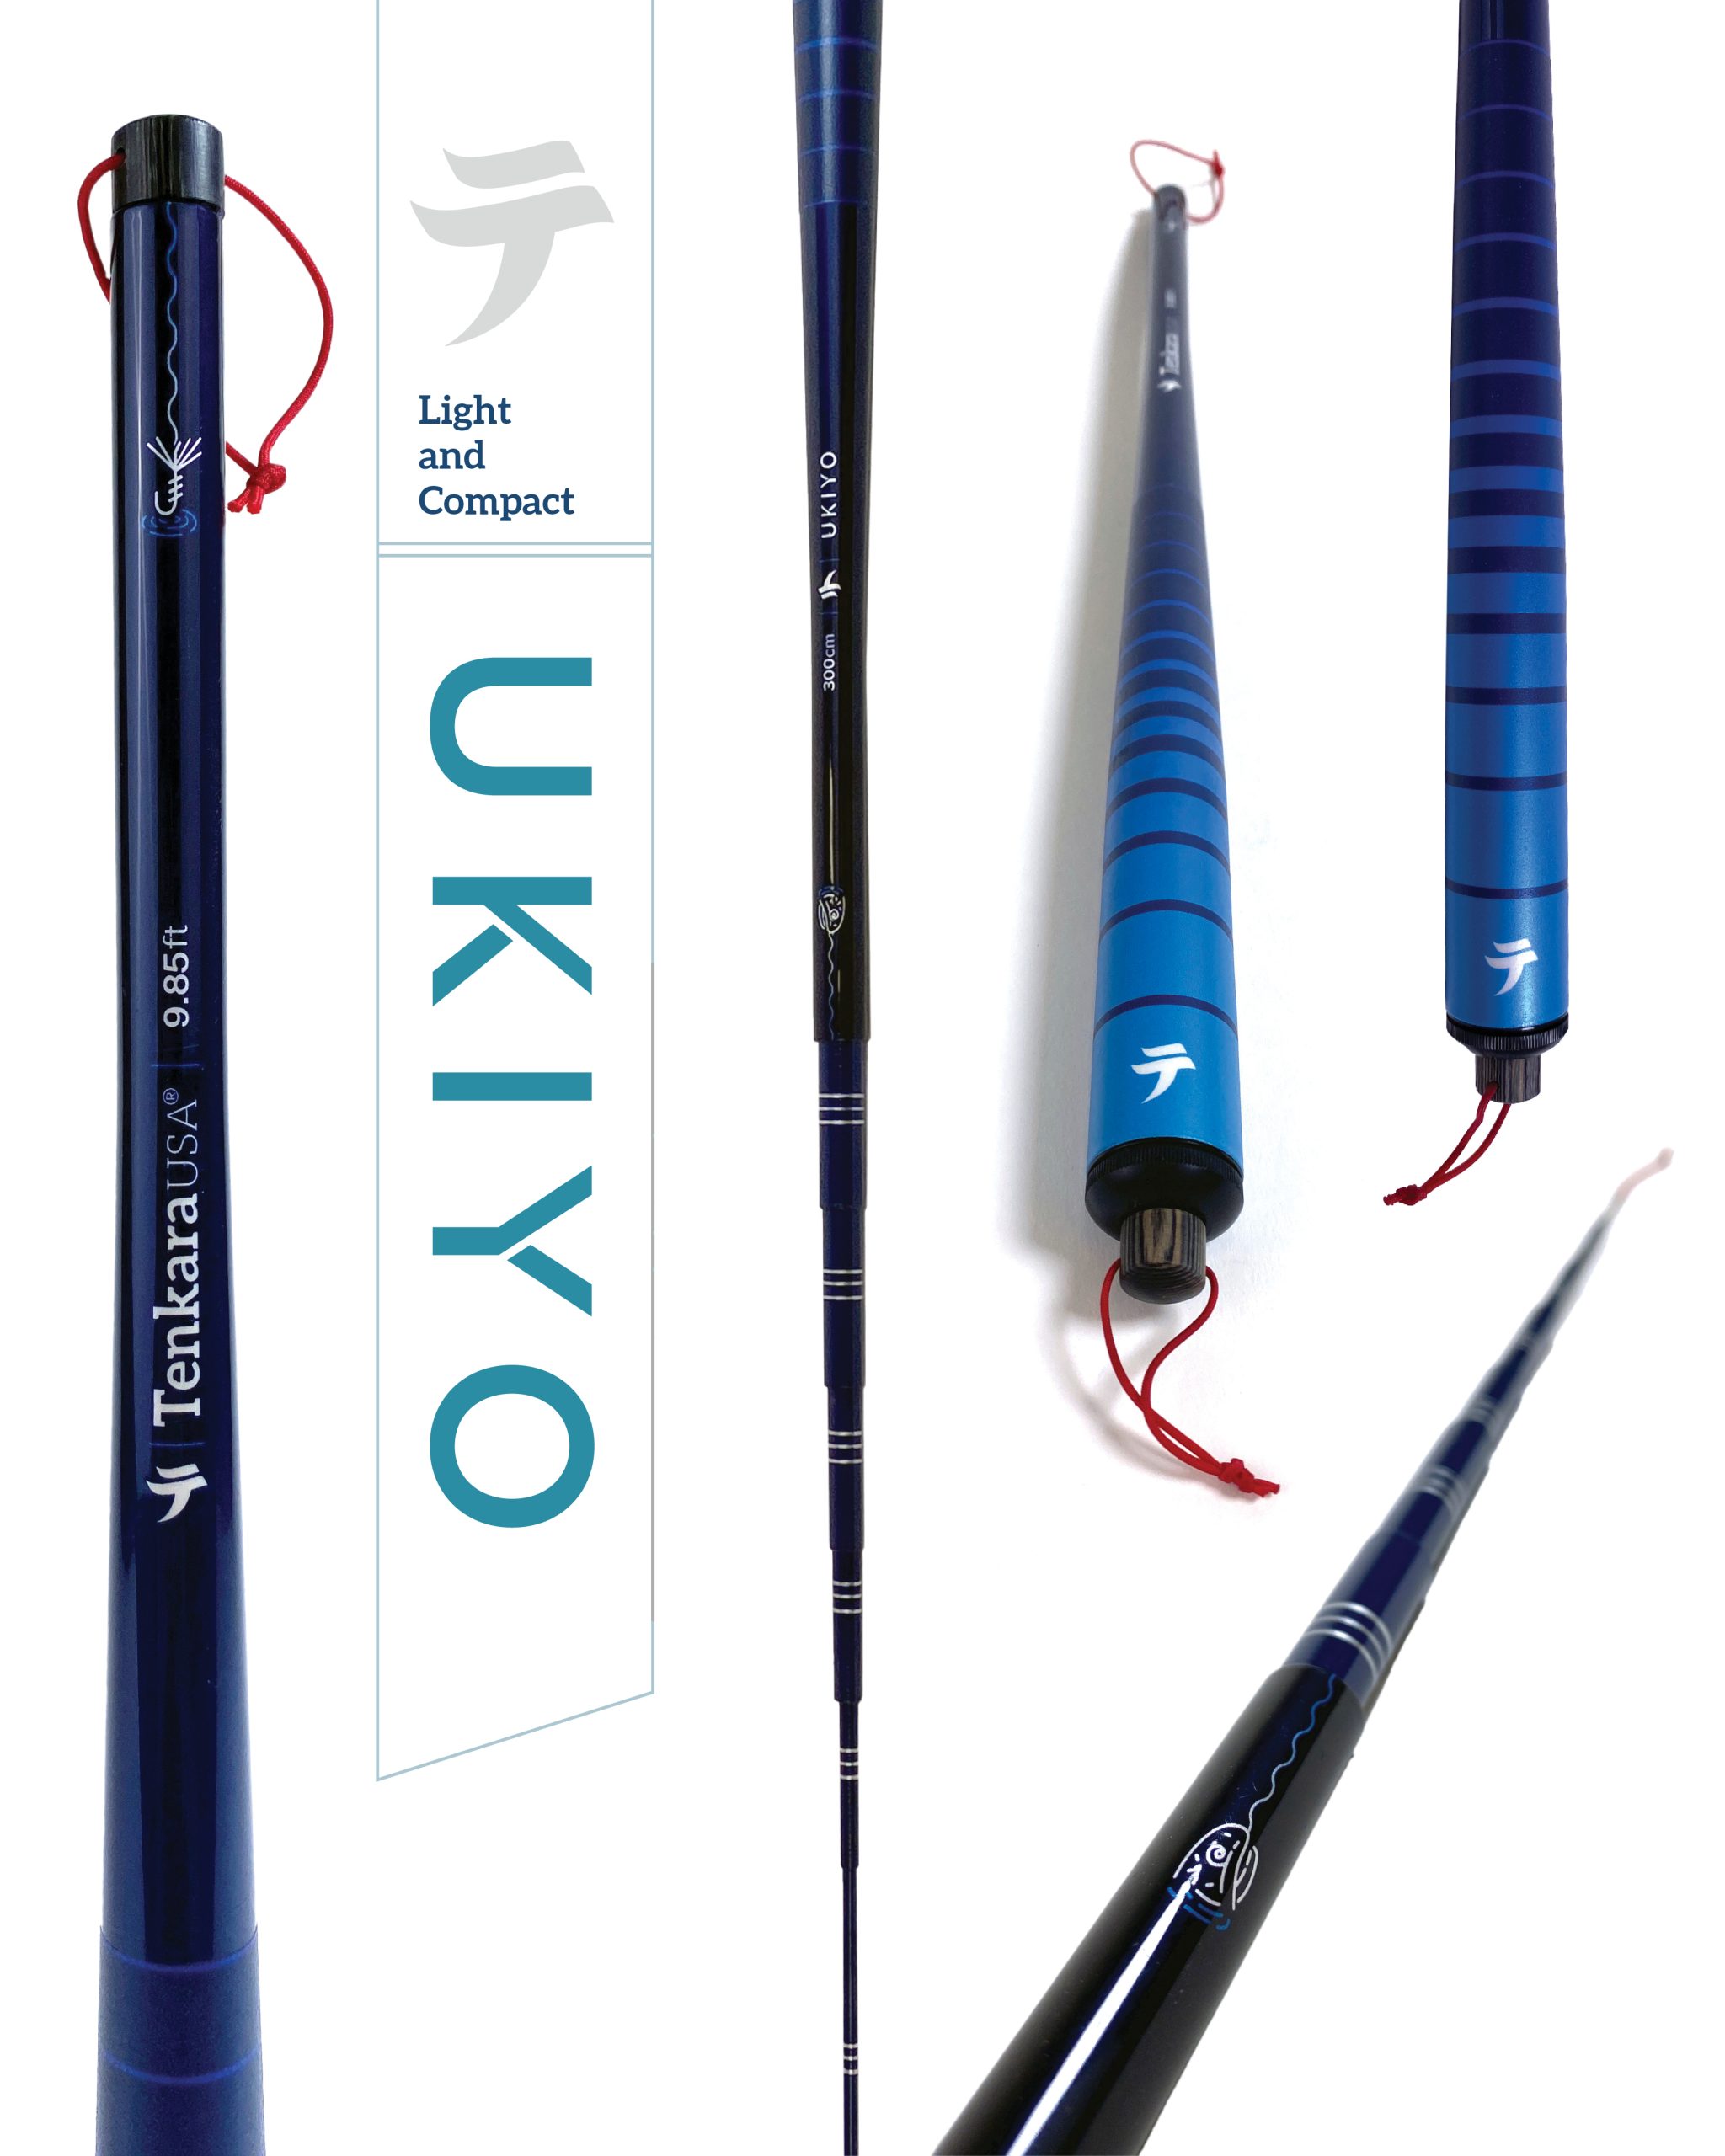 Tenkara USA Launches Ukiyo Rod